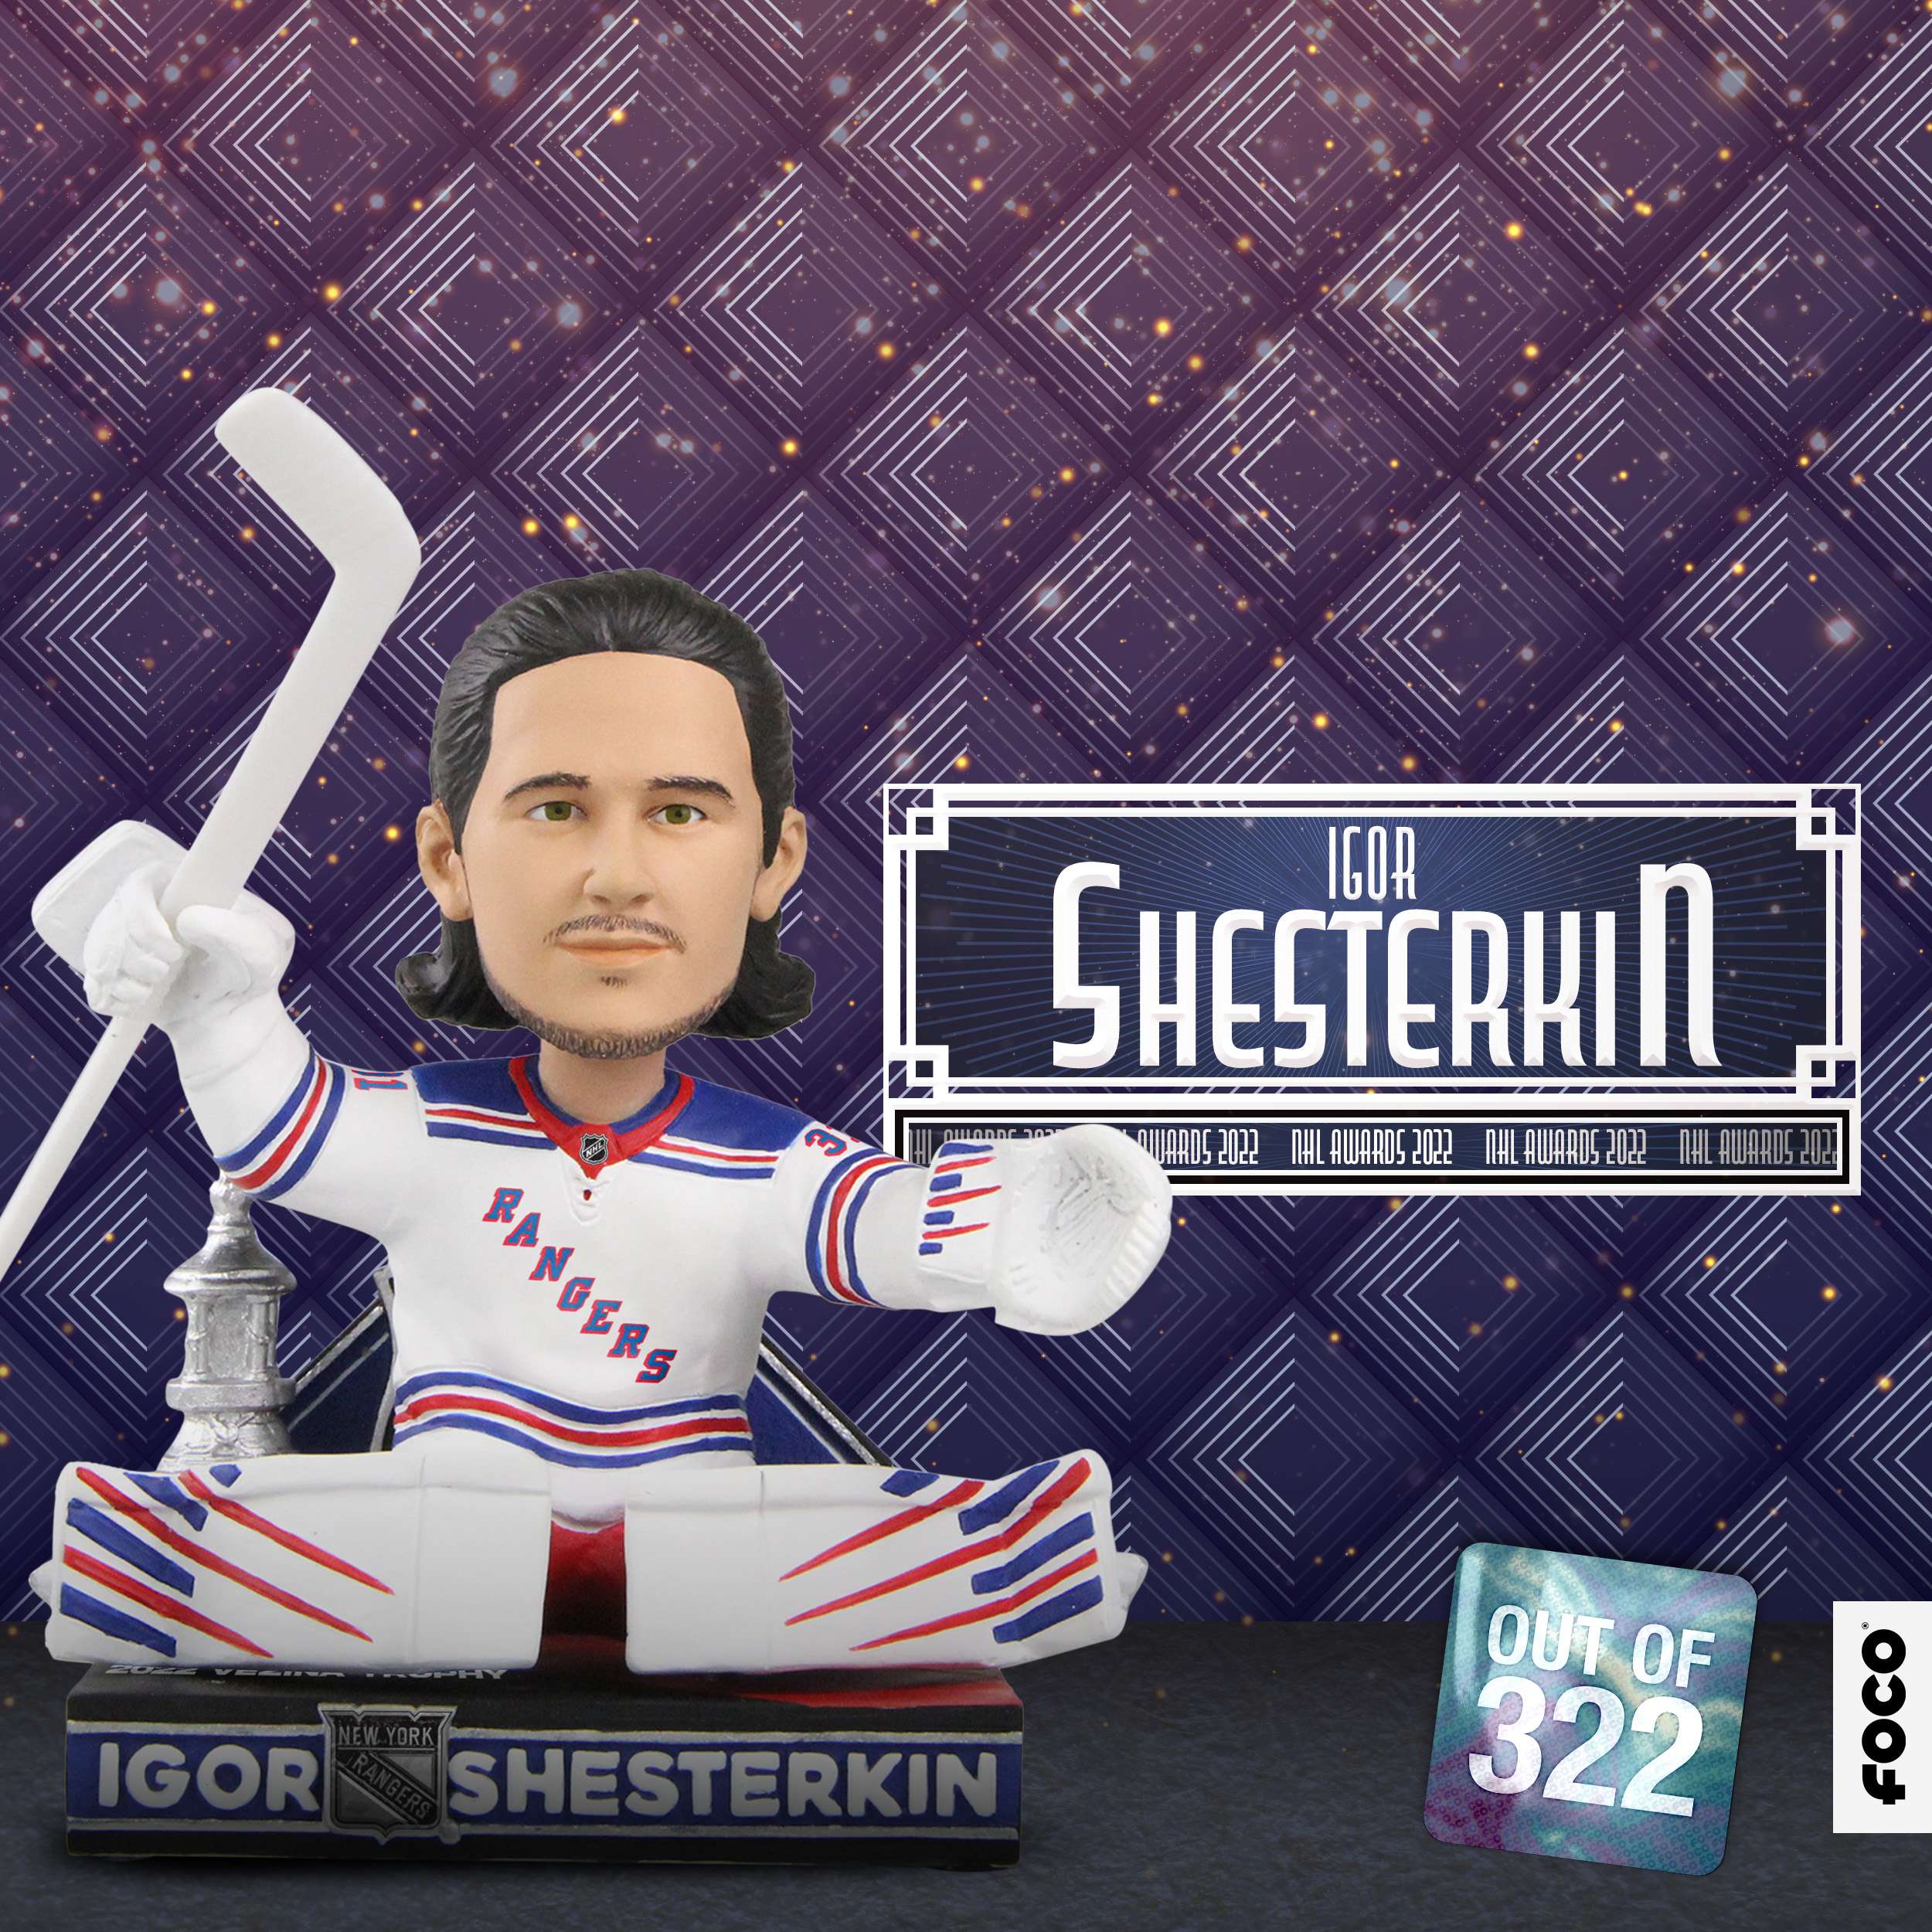 2022 NHL Awards: Rangers' Igor Shesterkin wins Vezina Trophy as